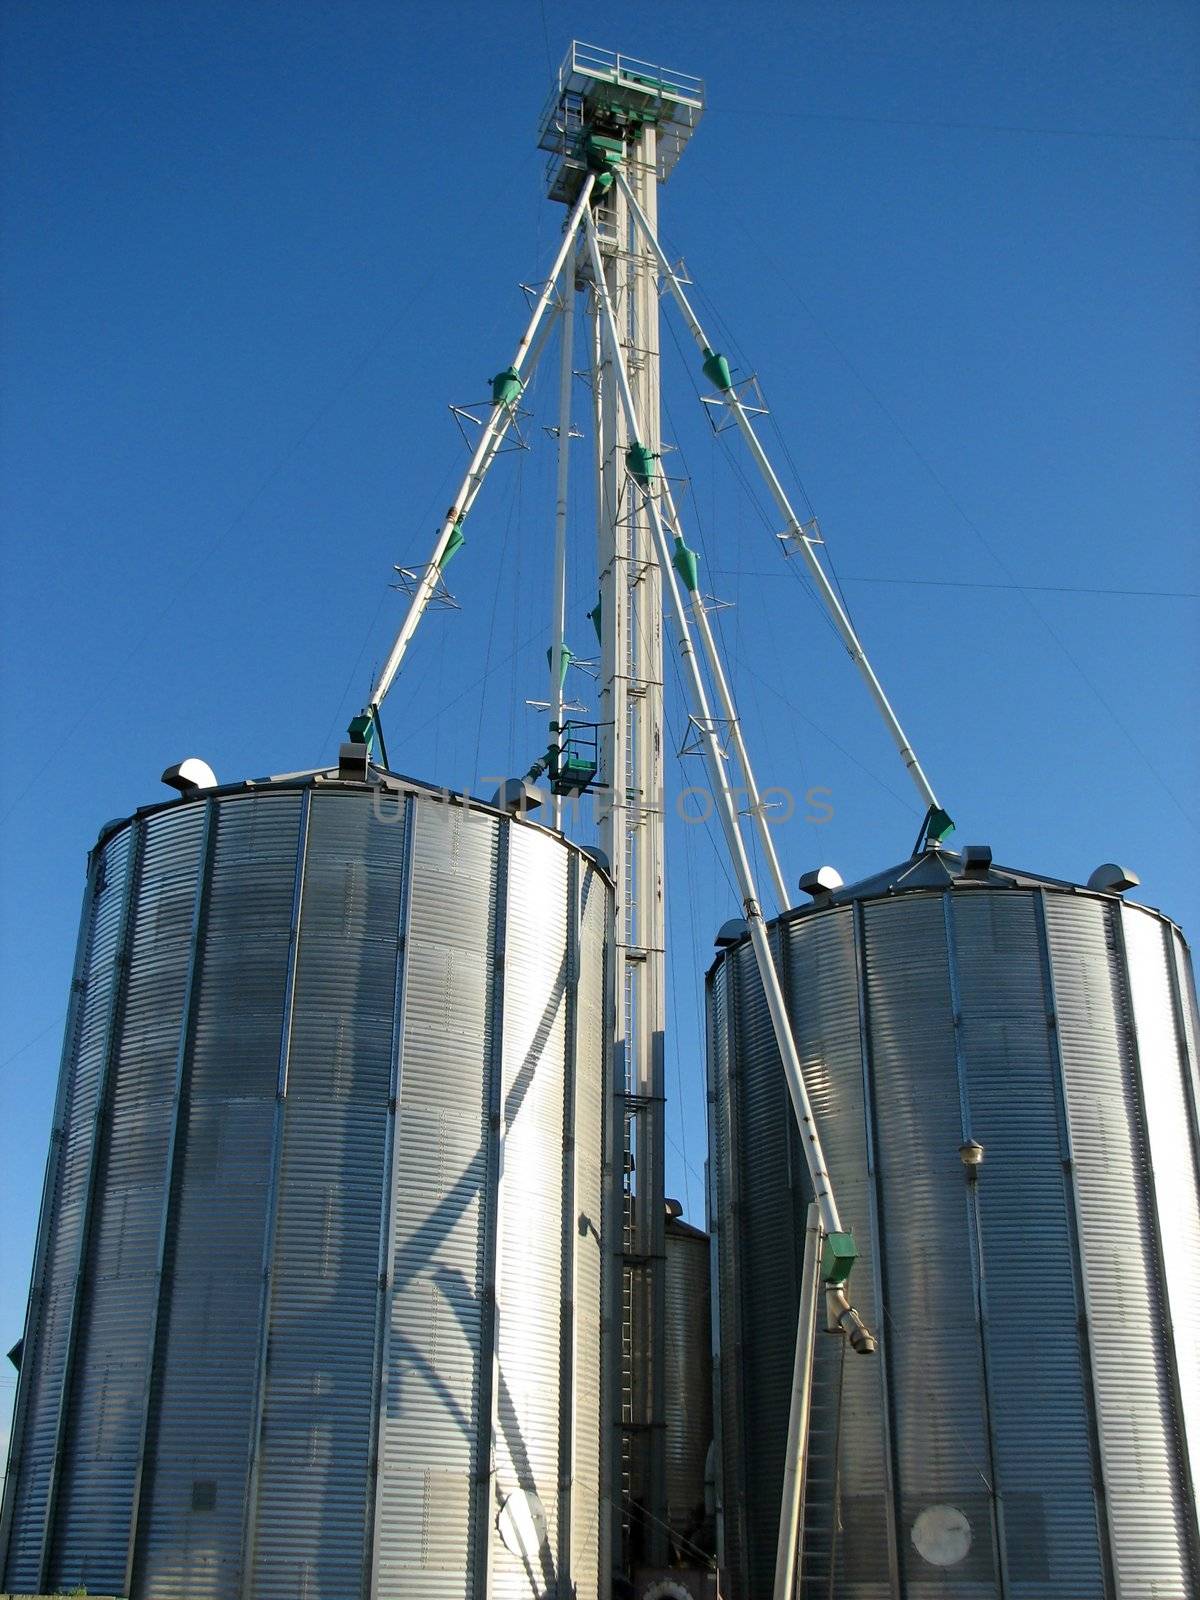 Steel grain bins and blue sky by anikasalsera